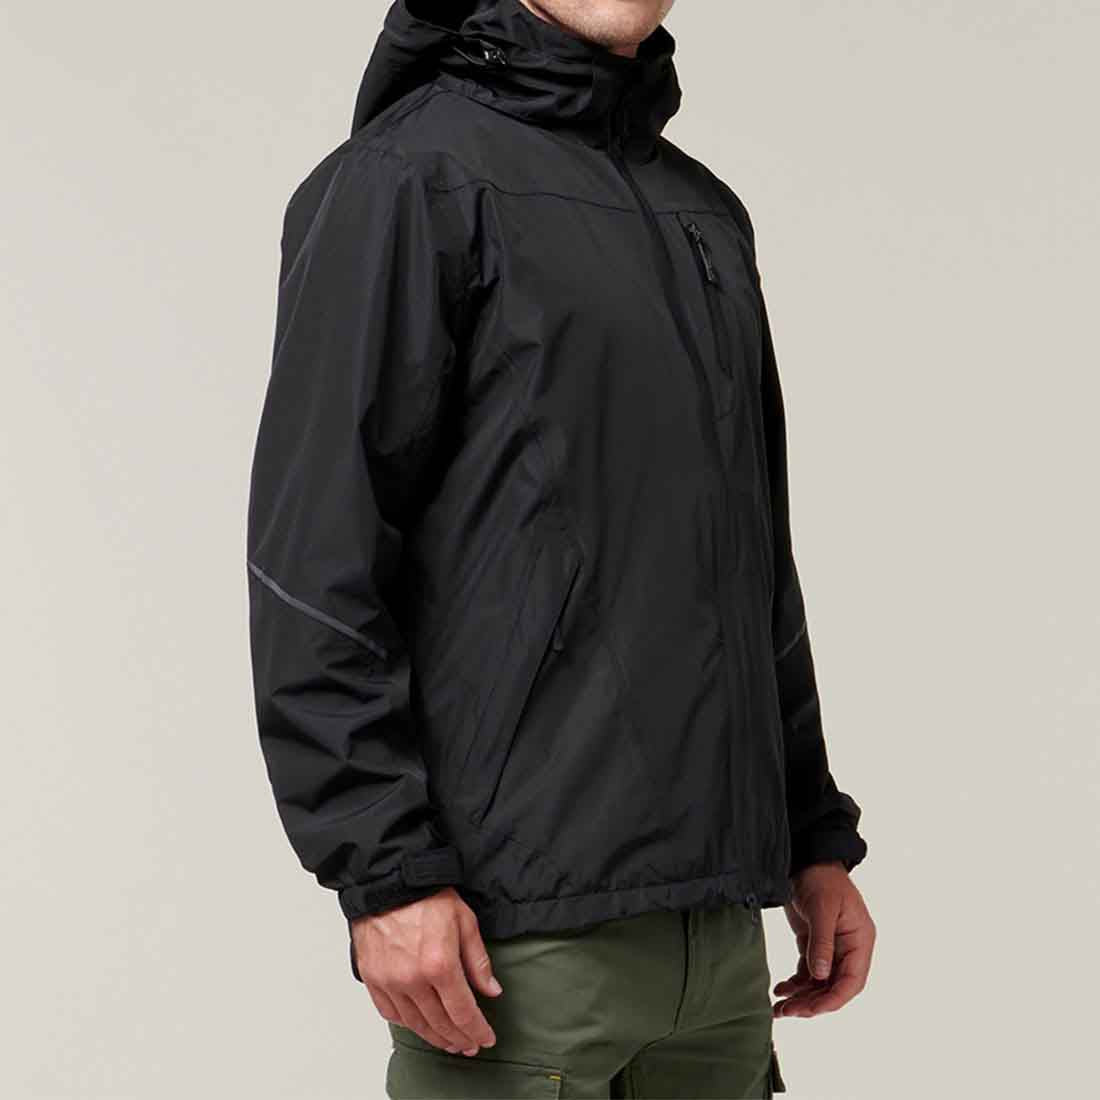 Hard Yakka Orbit Waterproof Jacket | Men's Black Waterproof Jacket